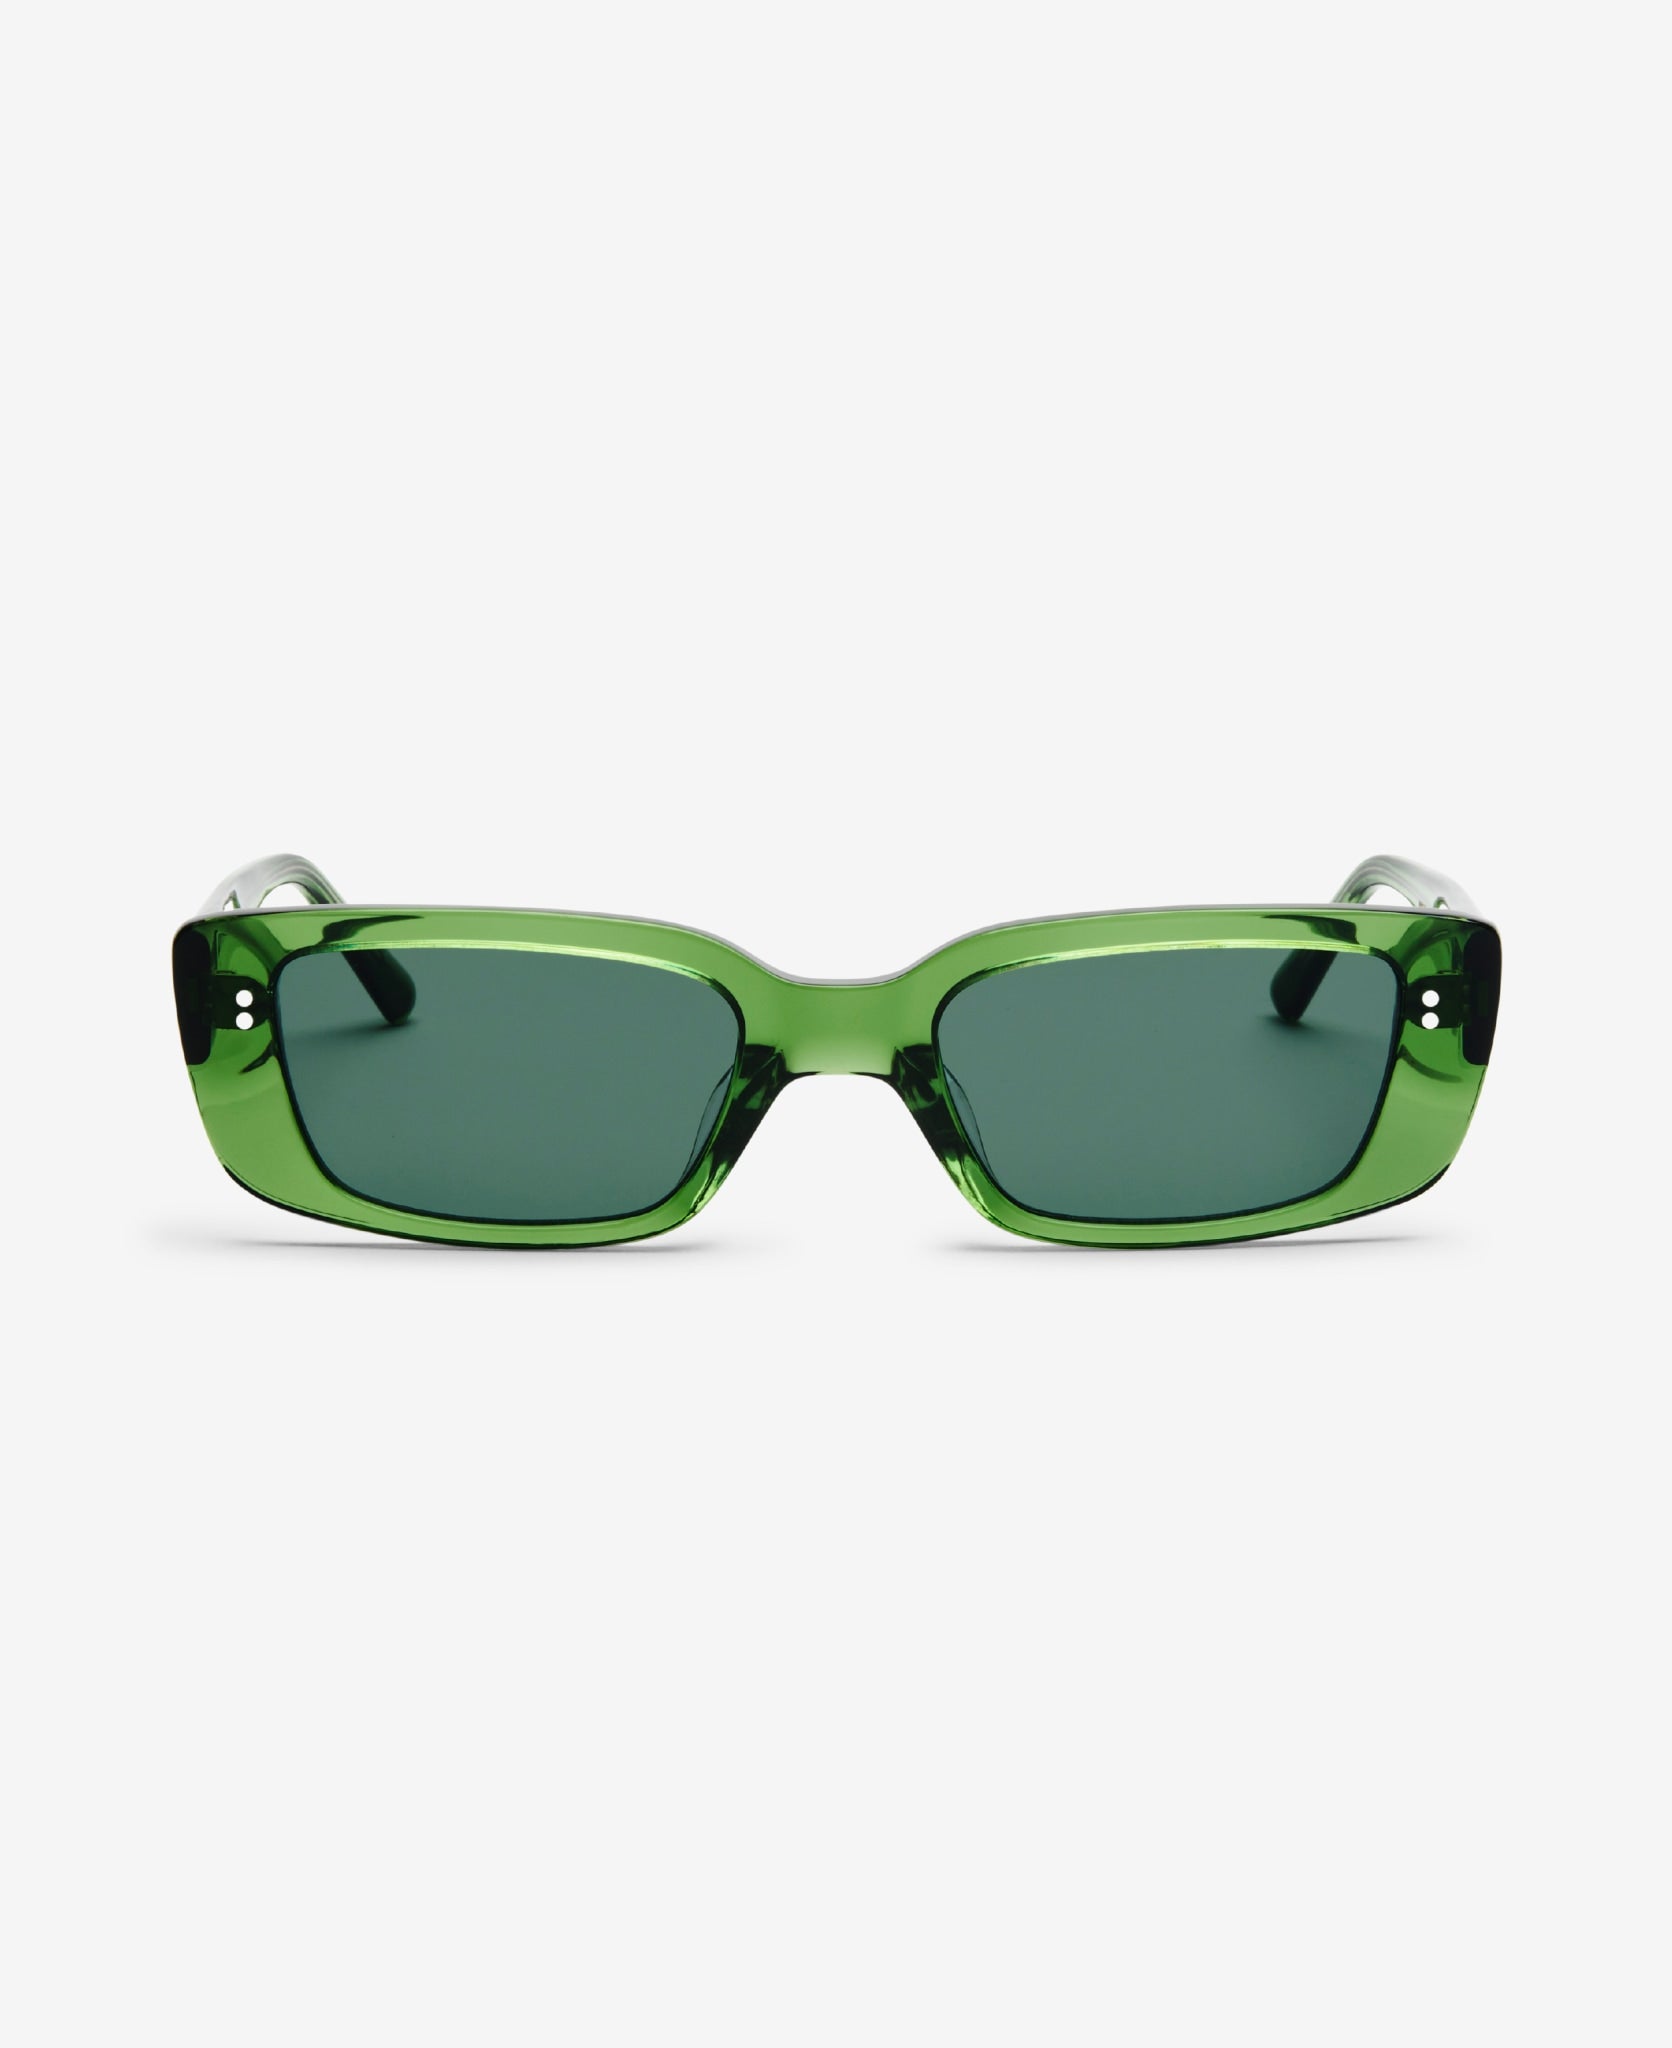 Parafina Costa Sunglasses For Women And Men UV400 Protection Polarized Glasses  Eco-friendly Water Resistant Ultra Light Frame Eco-Friendly Black Green  Lenses : Amazon.co.uk: Fashion